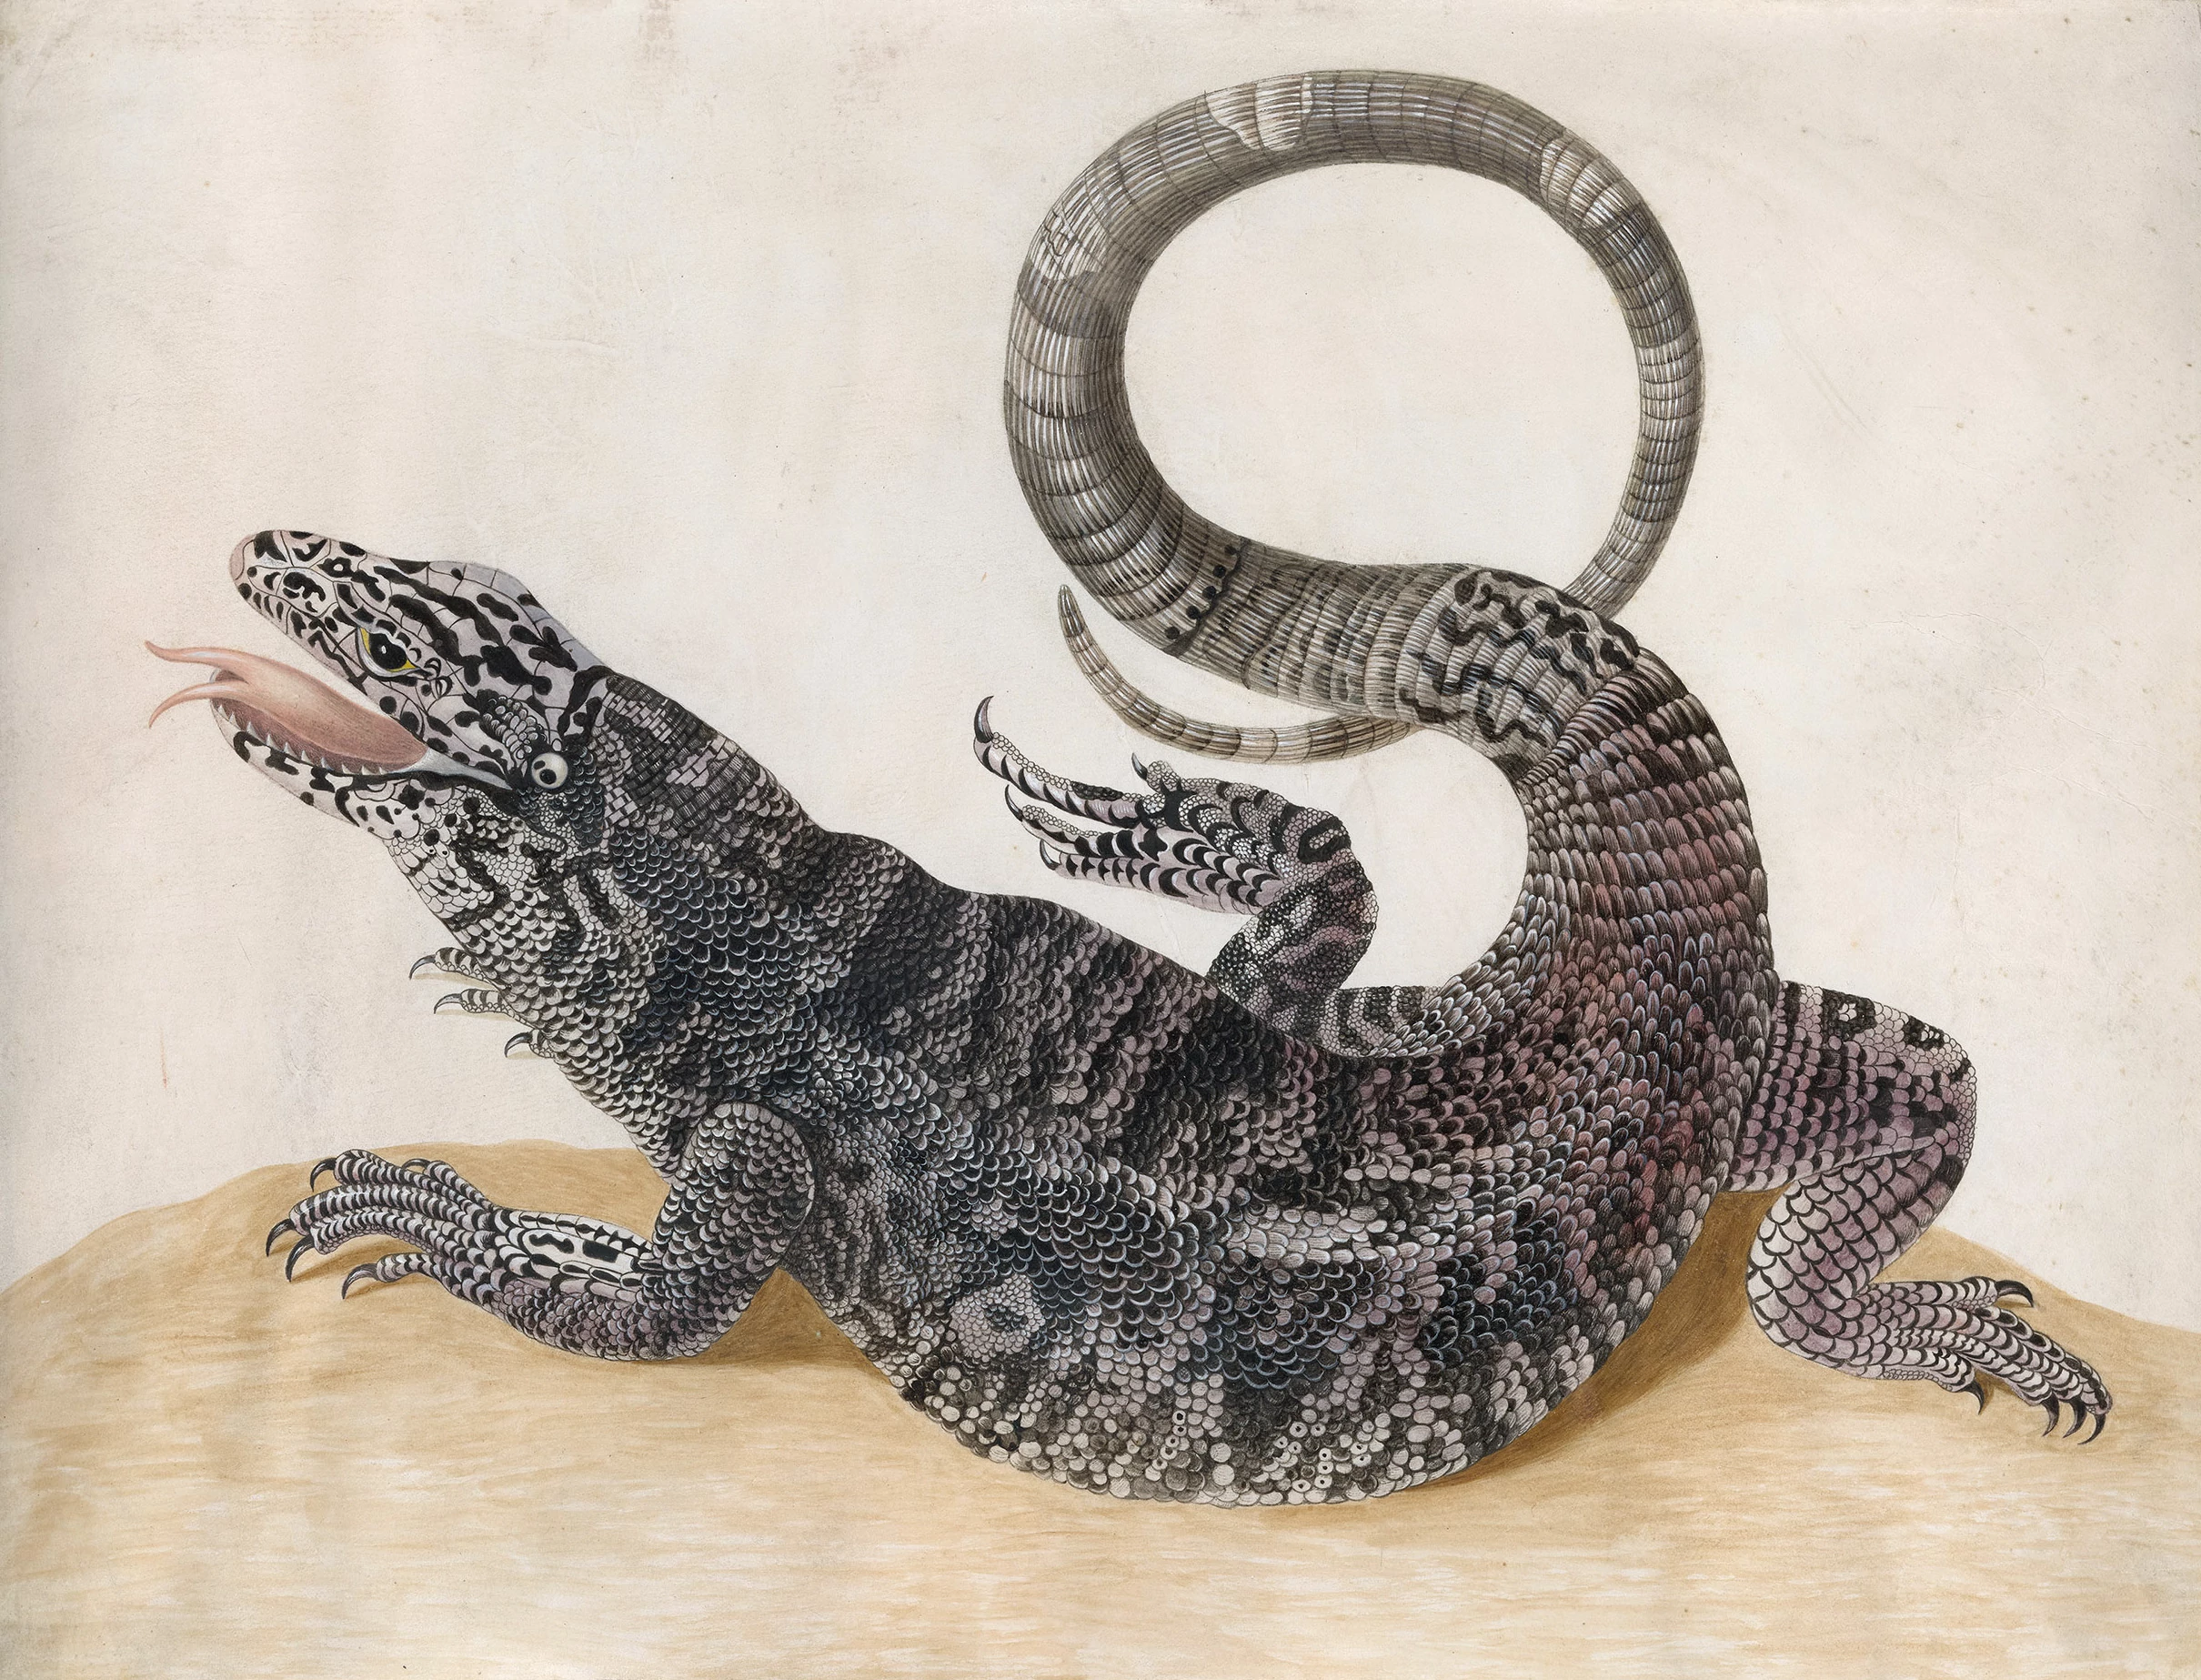 Black Tegu Lizard, Maria Sibylla Merian